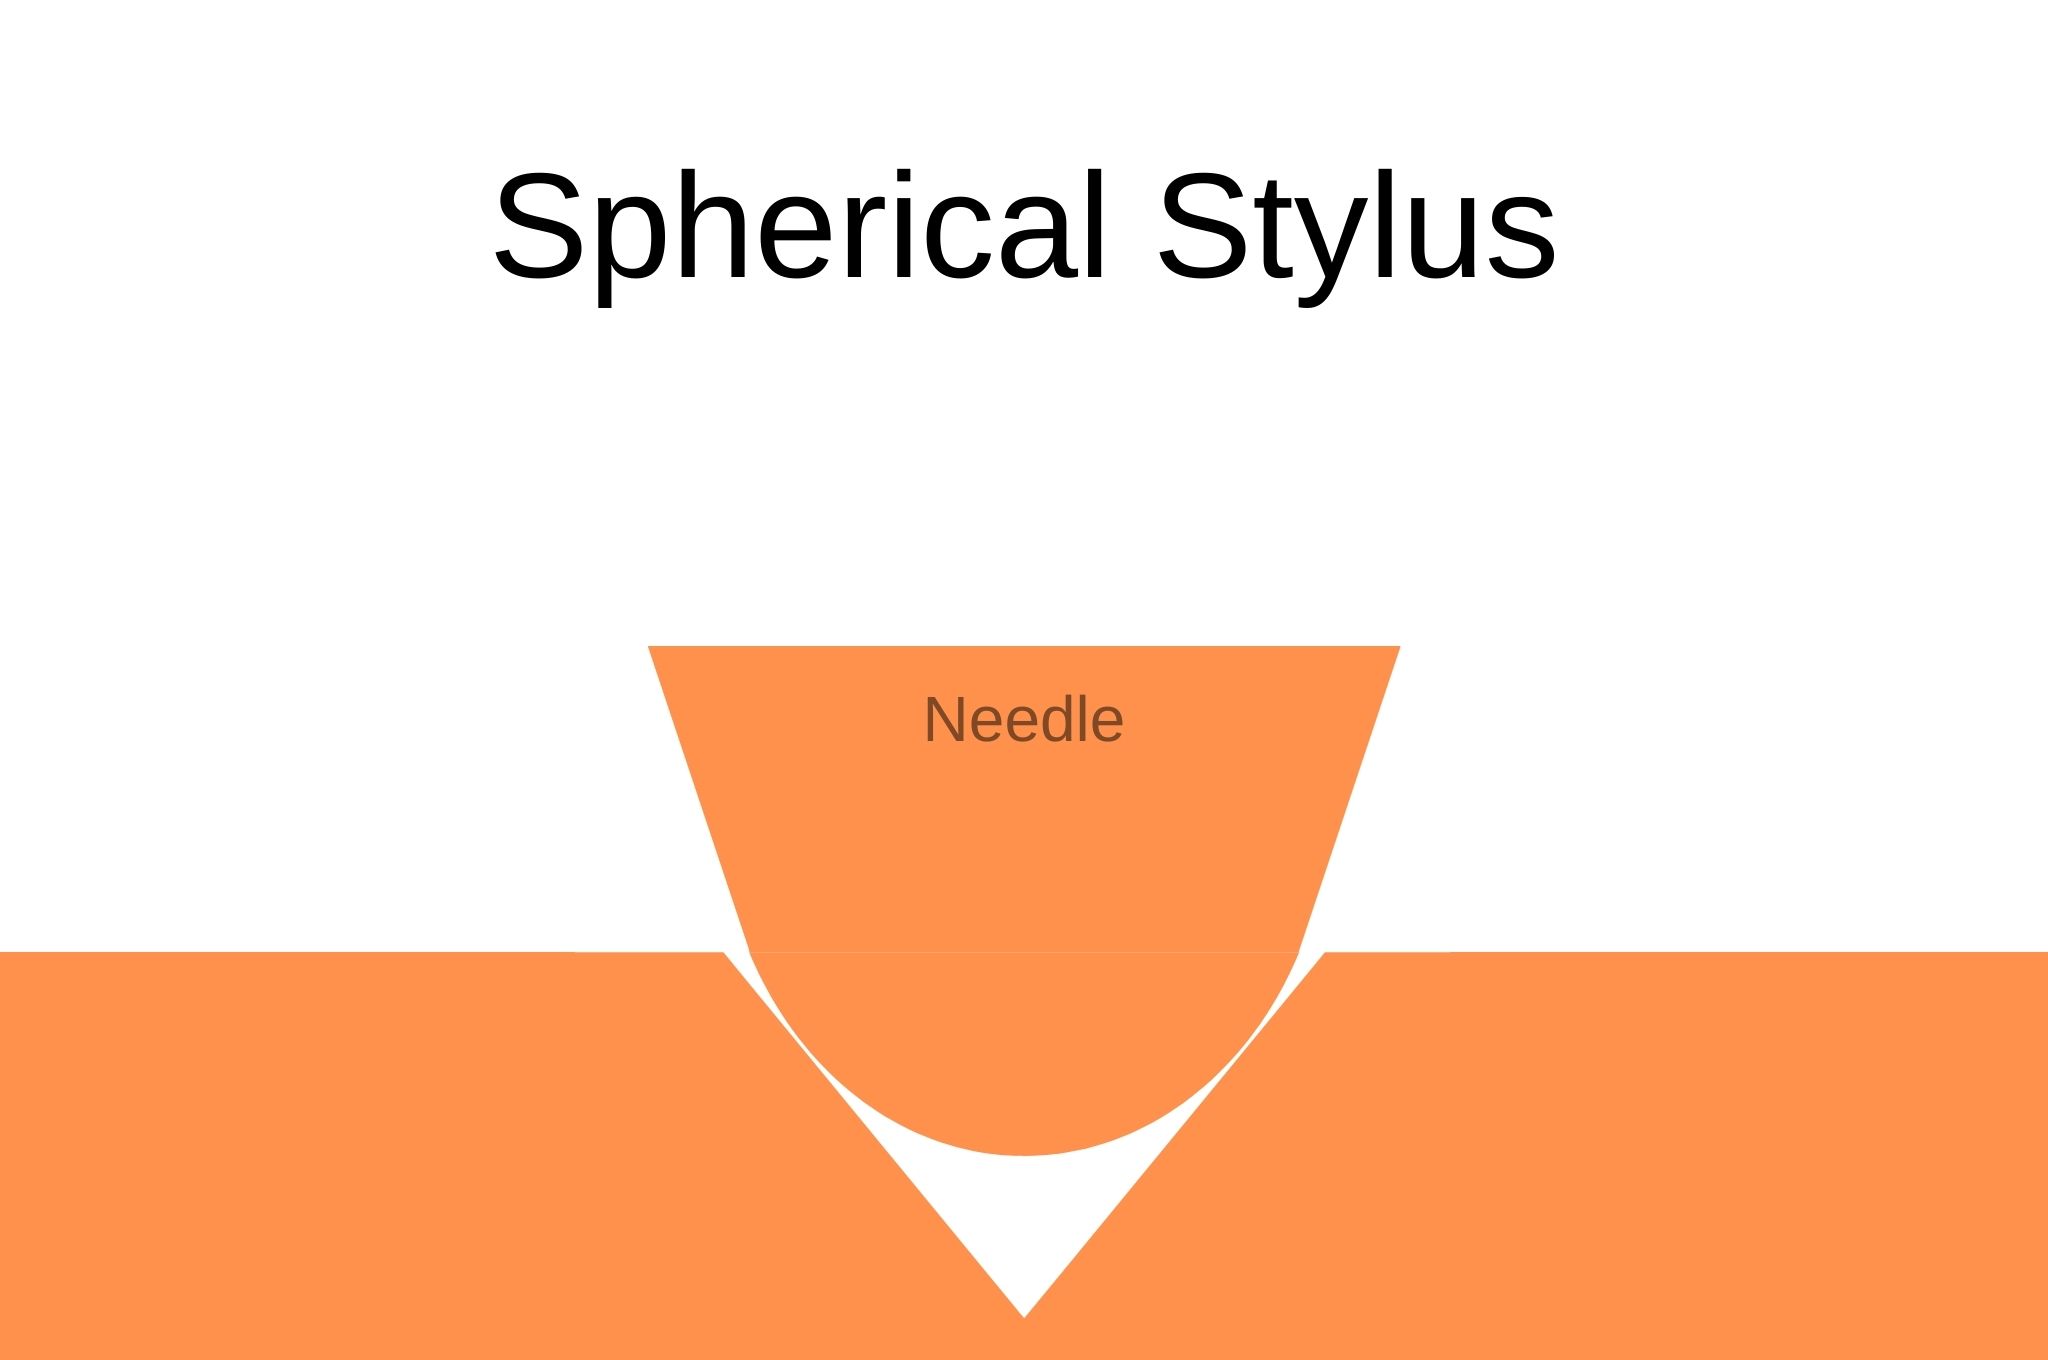 Spherical stylus